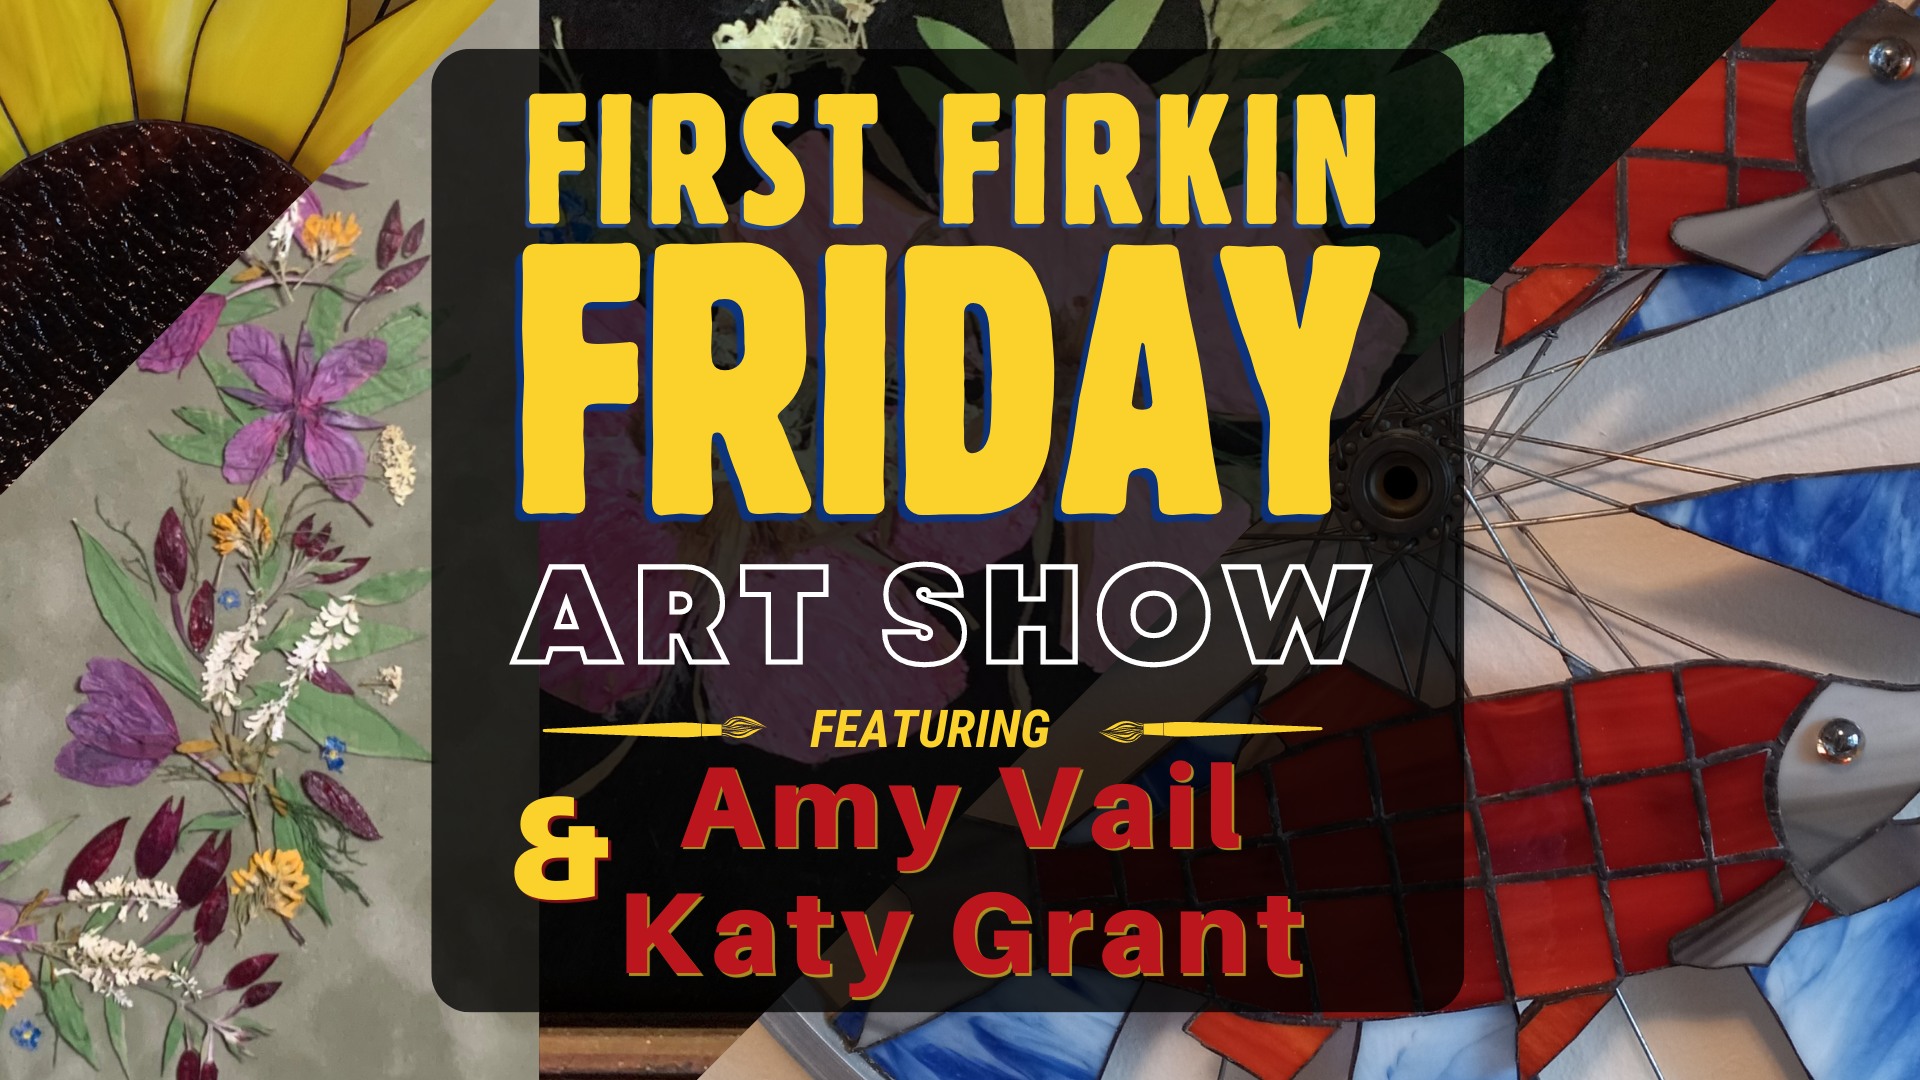 First Firkin Friday - Amy Vail & Katy Grant